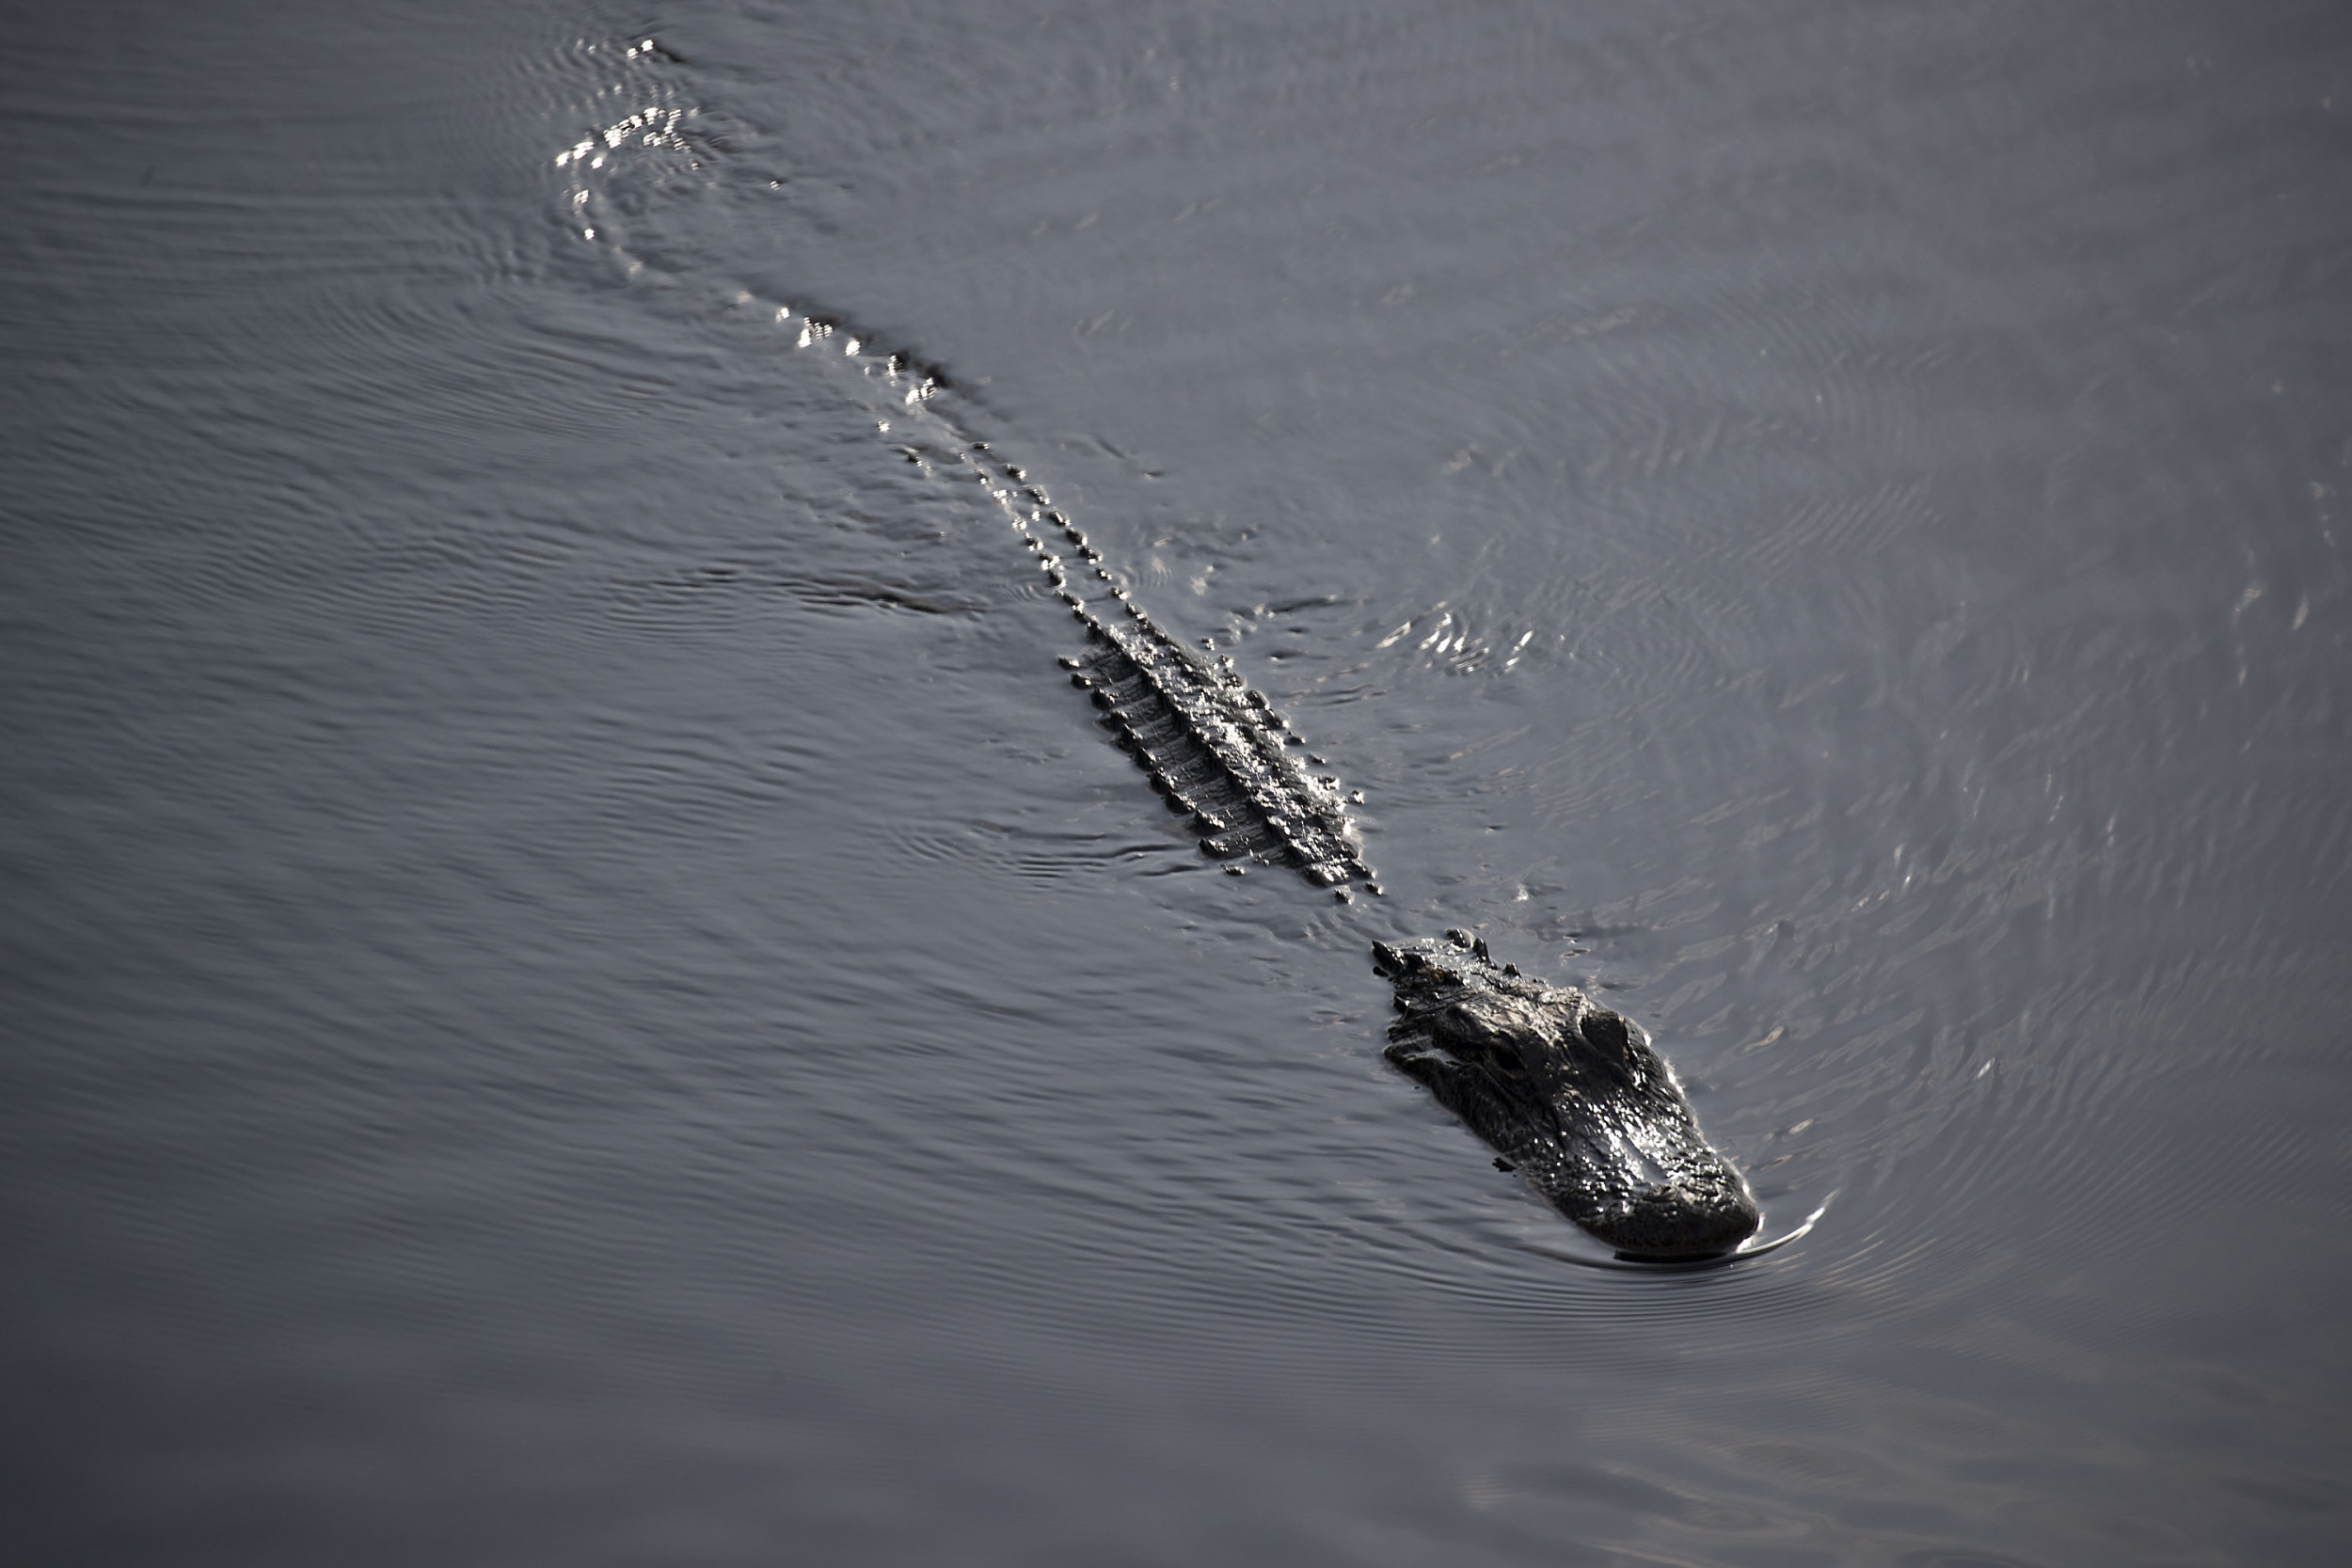 Alligator Bites Teenager on Outing at Everglades, Prompting Swim Warnings